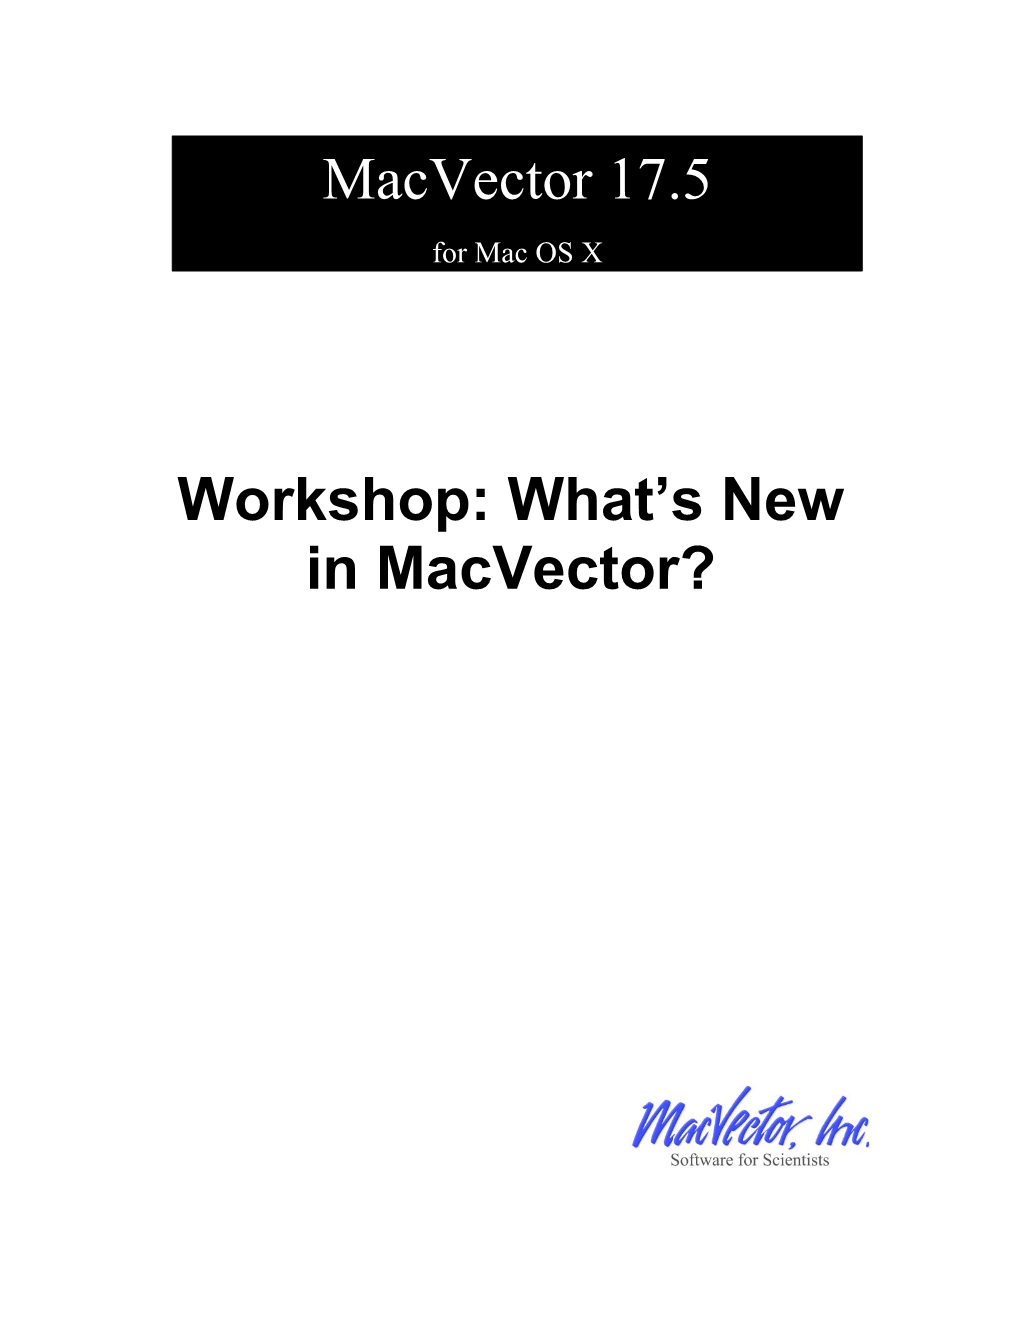 Workshop: What's New in Macvector? Macvector 17.5